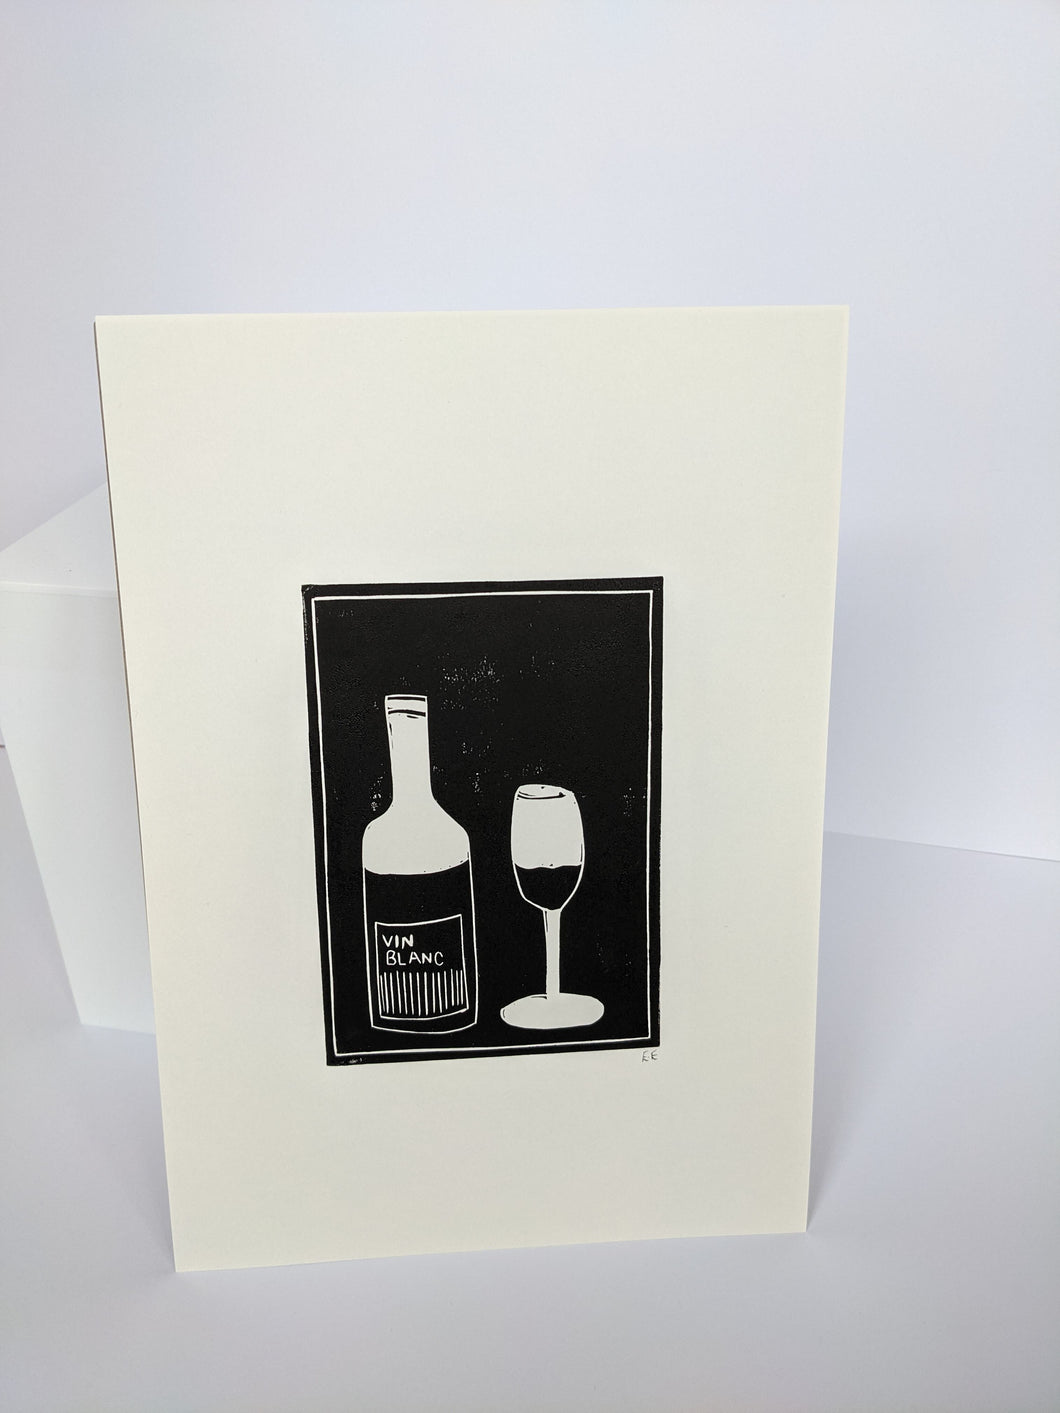 Black white wine print on a white background